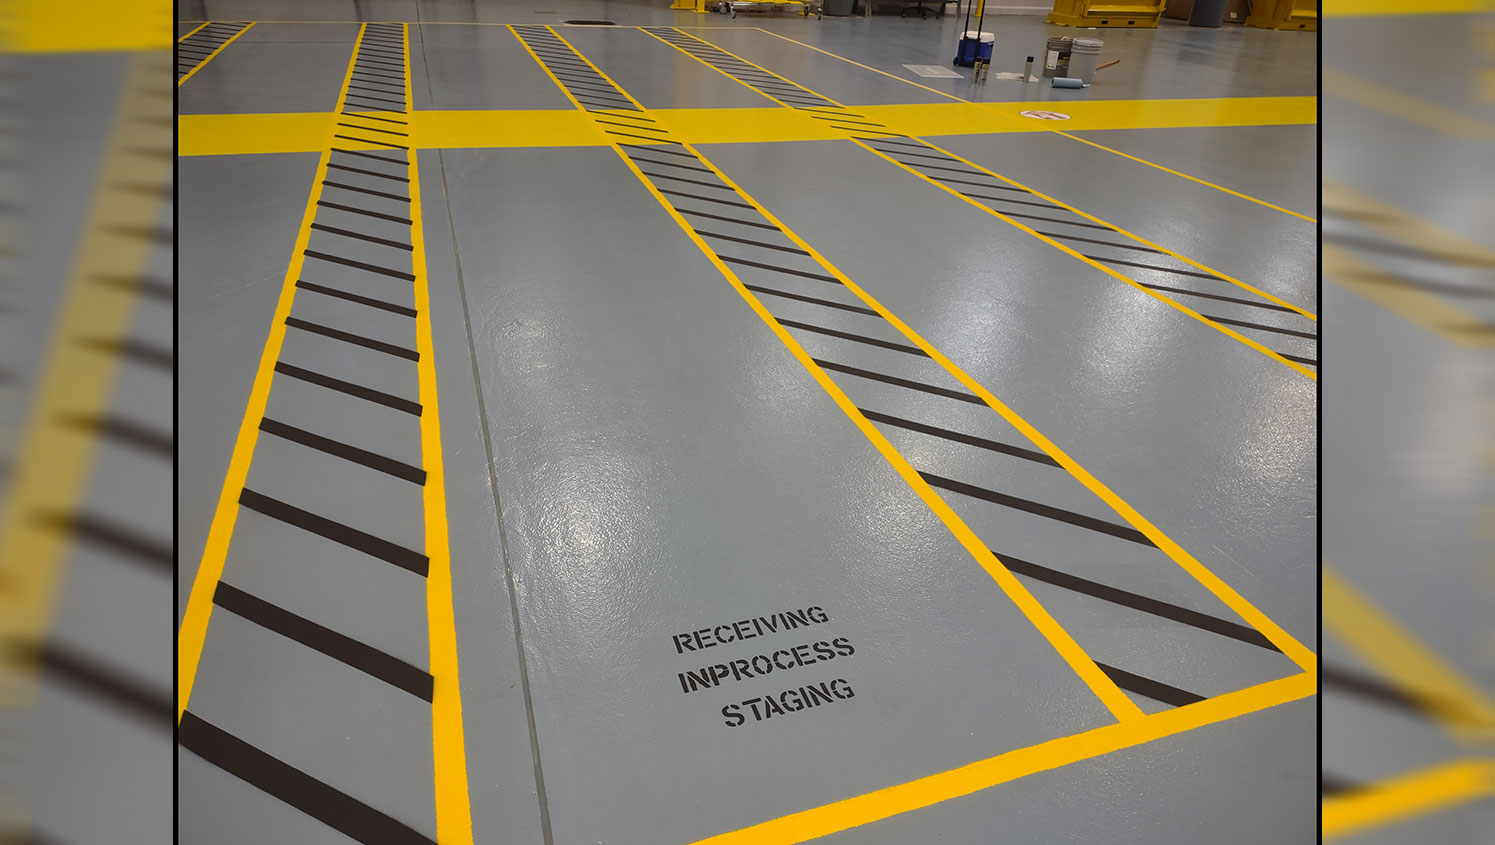 Receiving lane painted on floor of warehouse